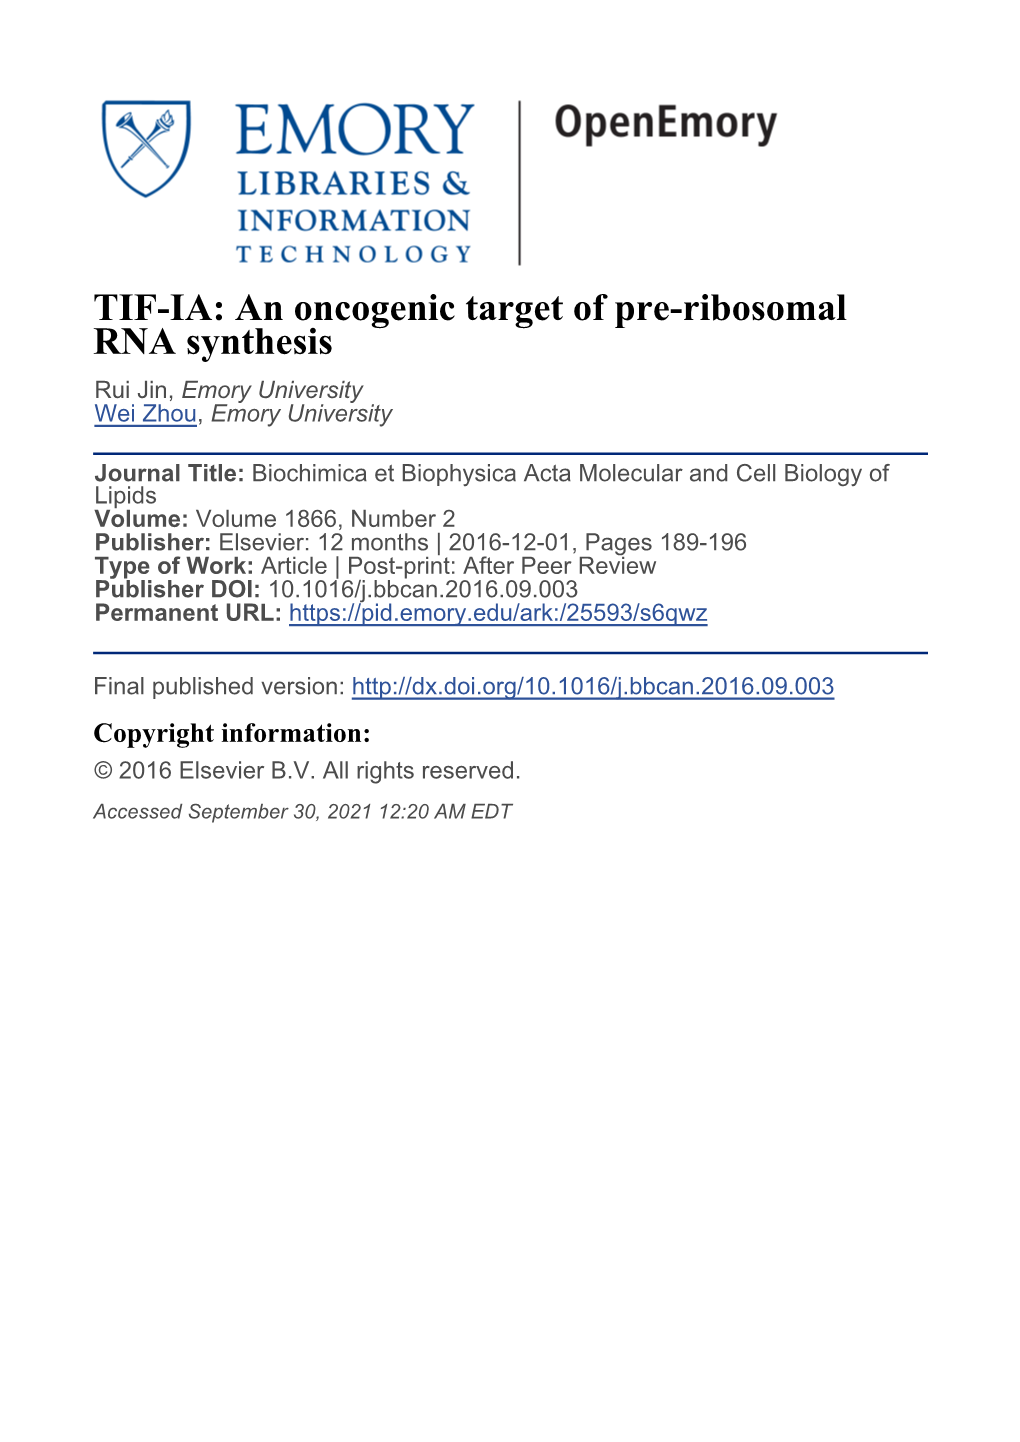 TIF-IA: an Oncogenic Target of Pre-Ribosomal RNA Synthesis Rui Jin, Emory University Wei Zhou, Emory University